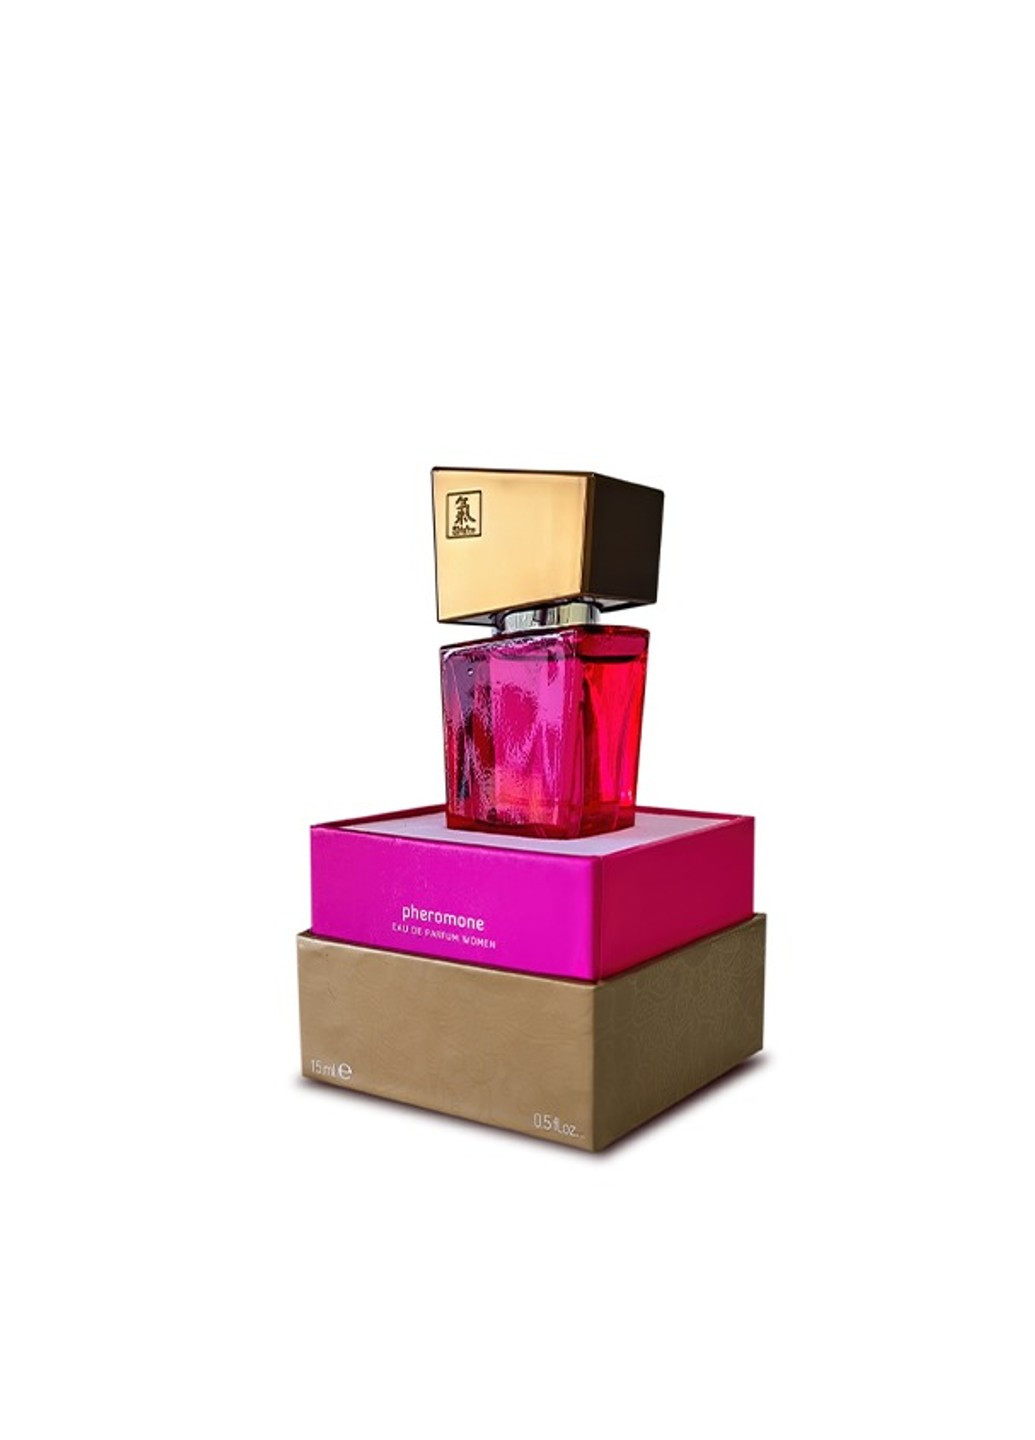 Духи с феромонами женские SHIATSU Pheromone Fragrance women pink 15 ml Hot (258551437)